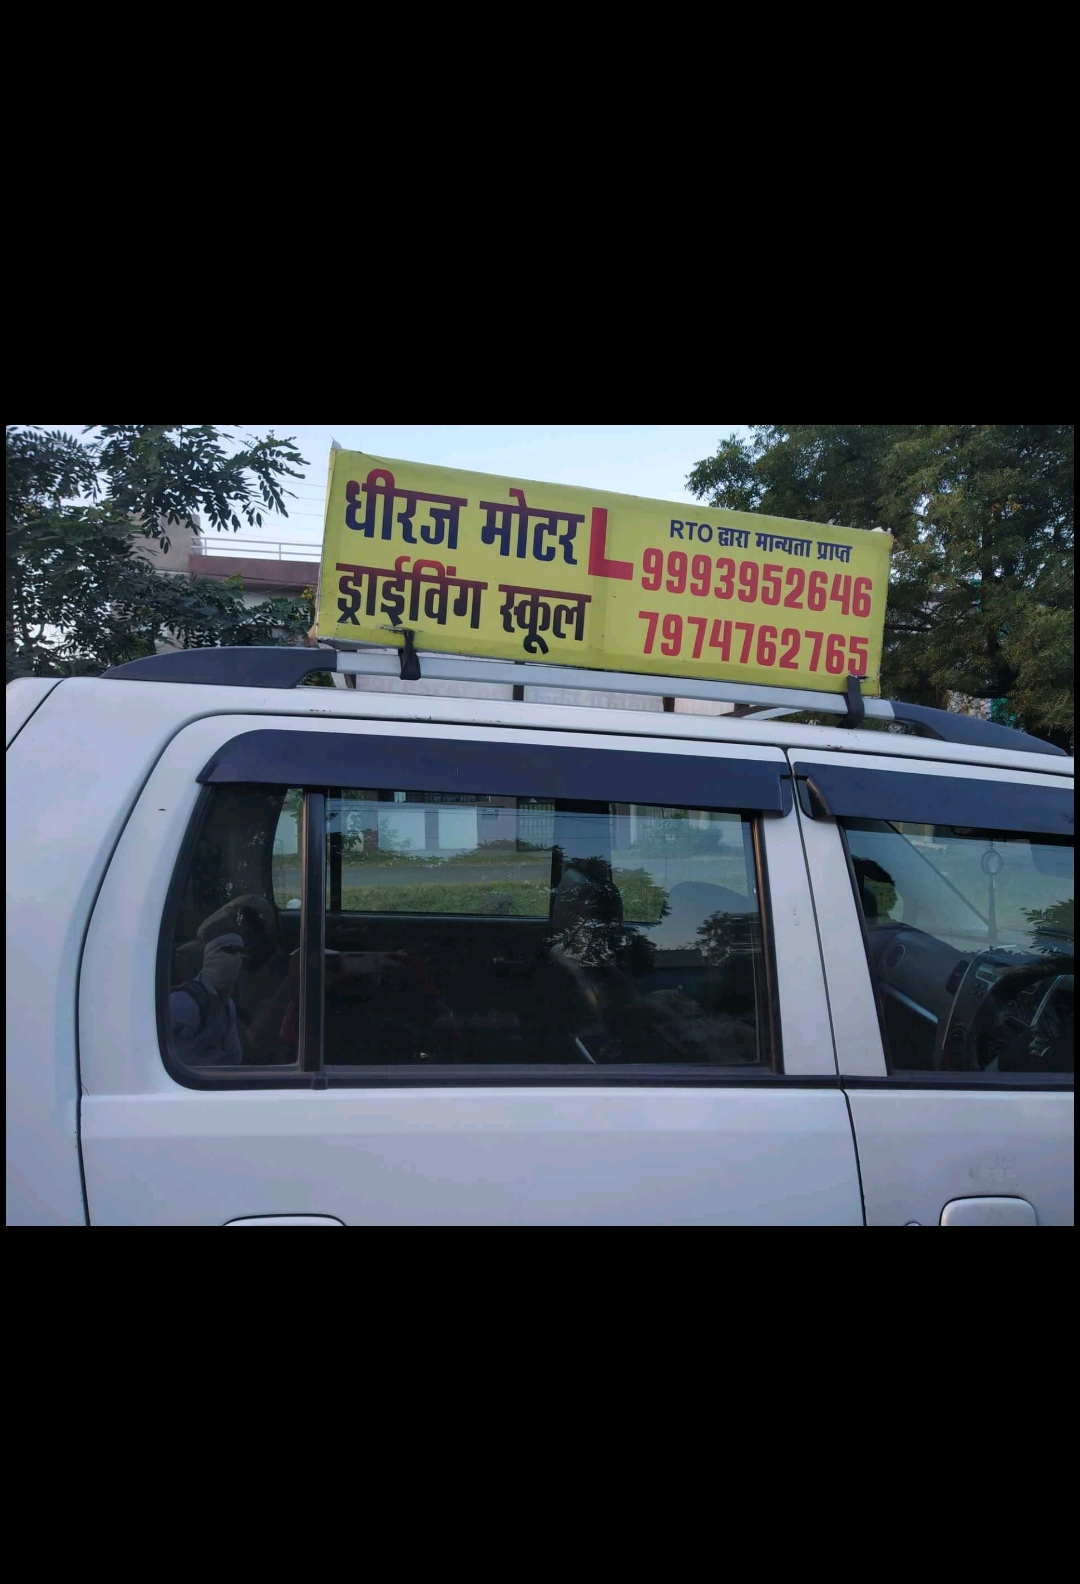 Dhiraj Motor Driving school in Bhopal 